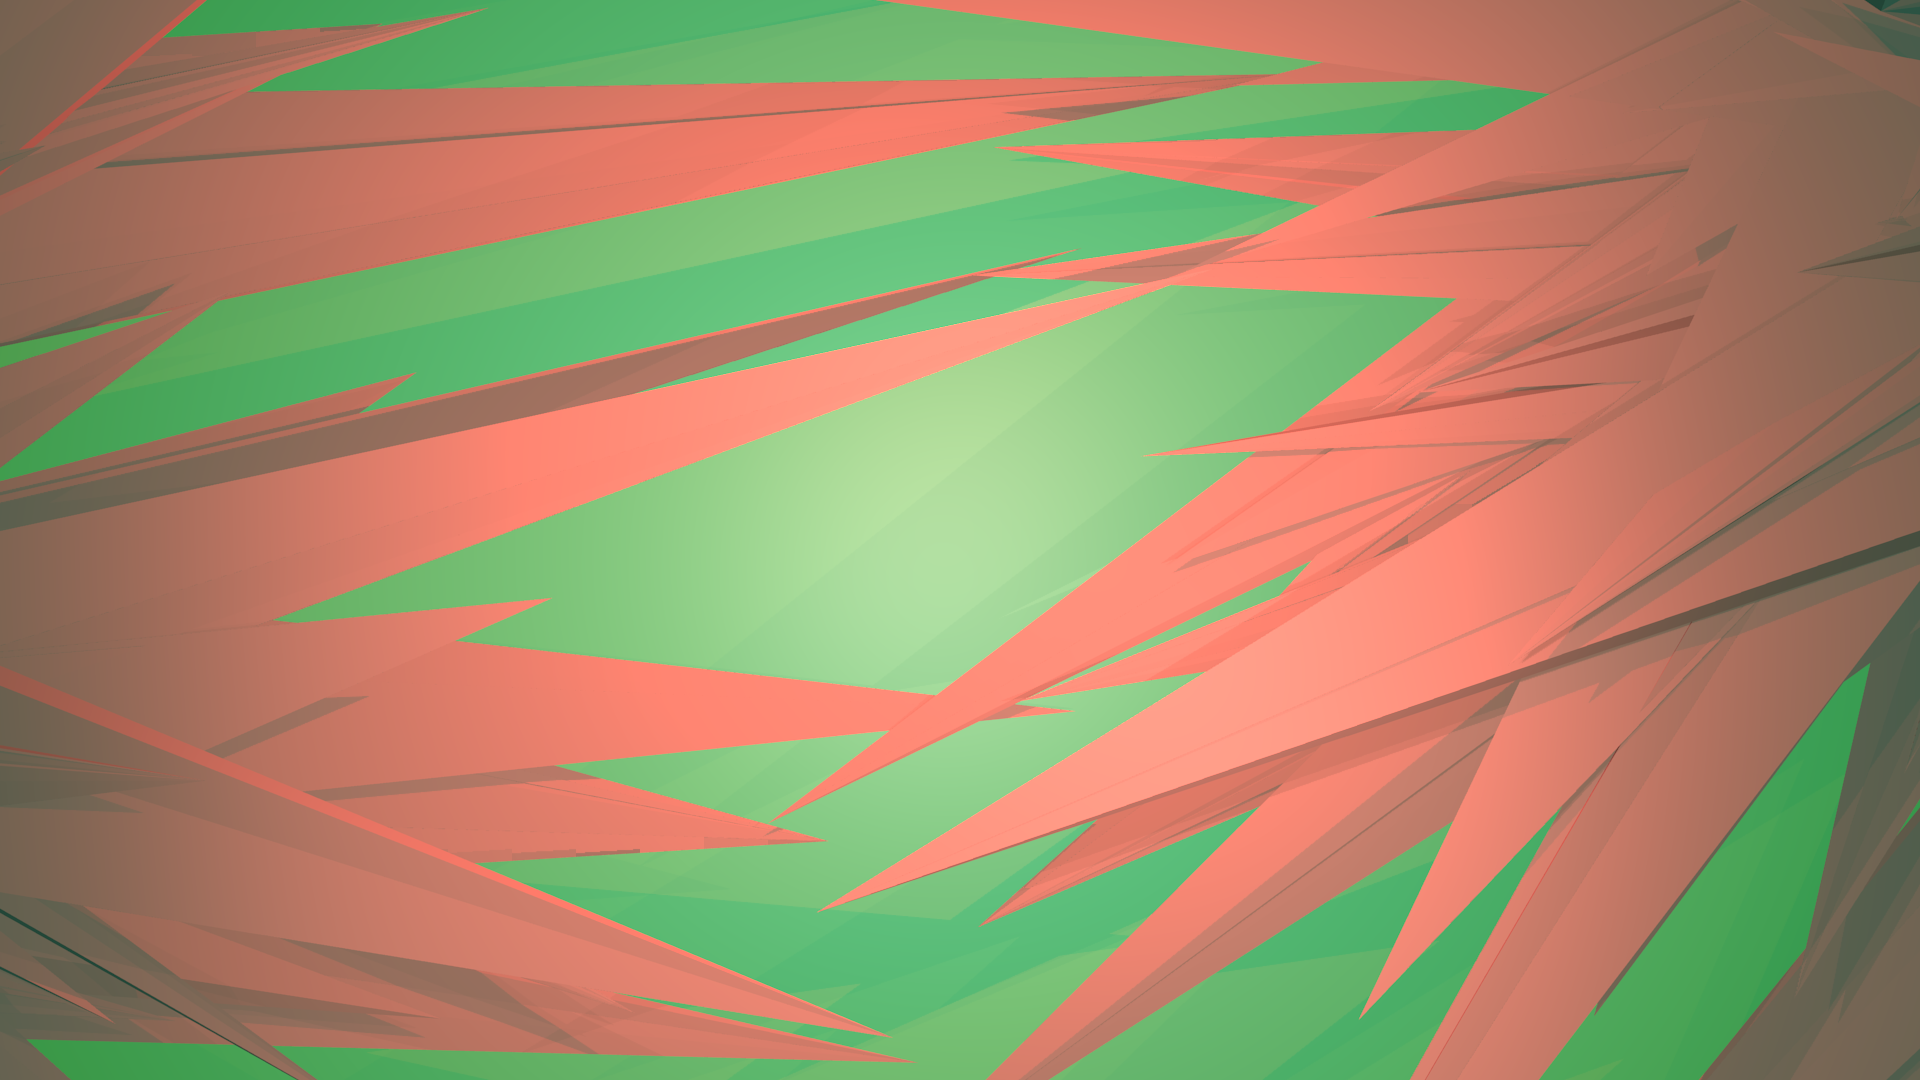 General 1920x1080 minimalism colorful abstract geometry digital art artwork green pink